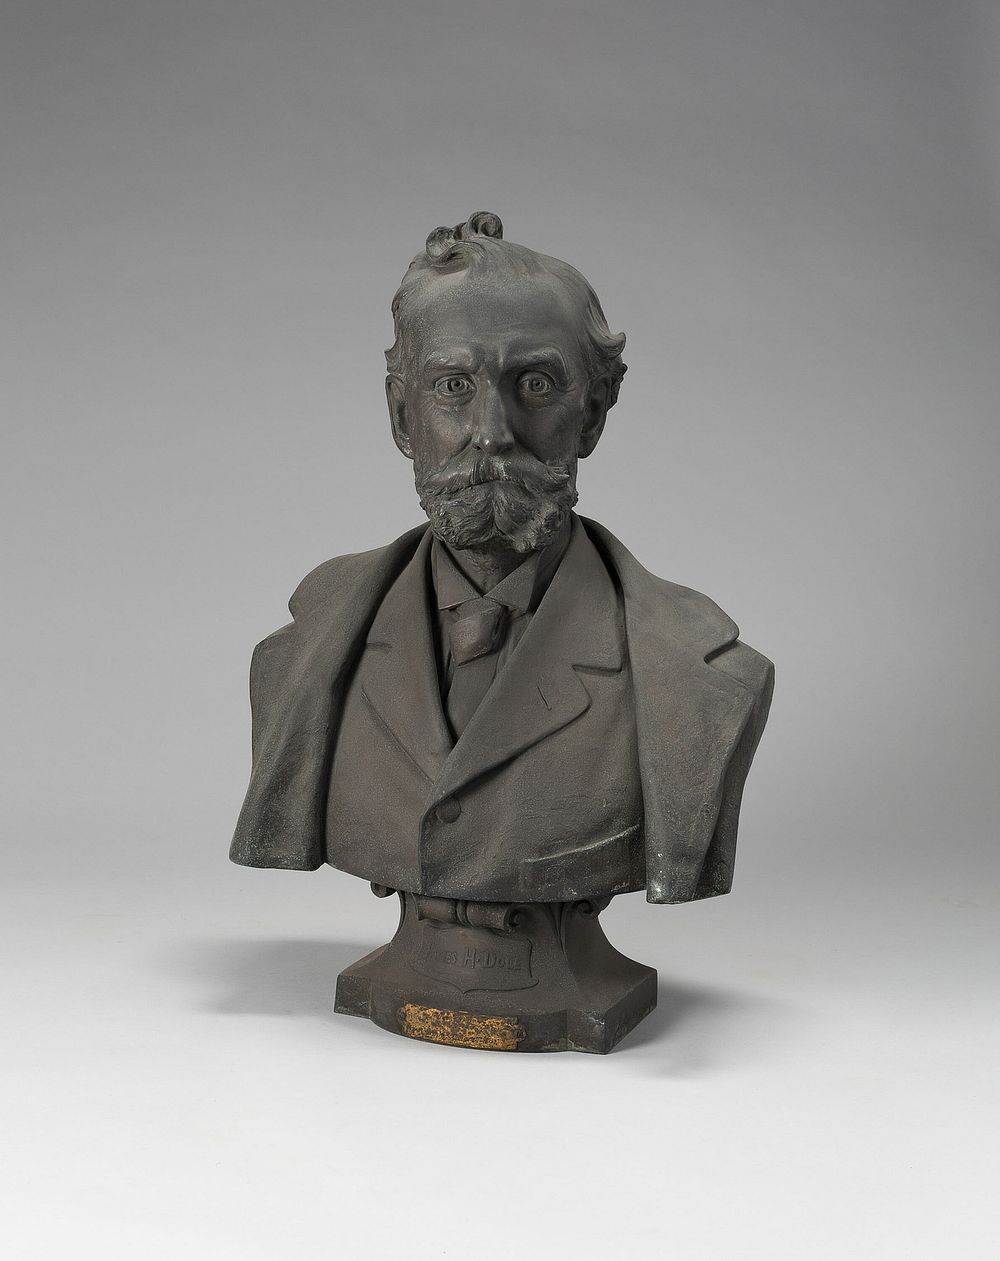 James H. Dole (1824-1902) by Johannes Sophus Gelert (Sculptor)